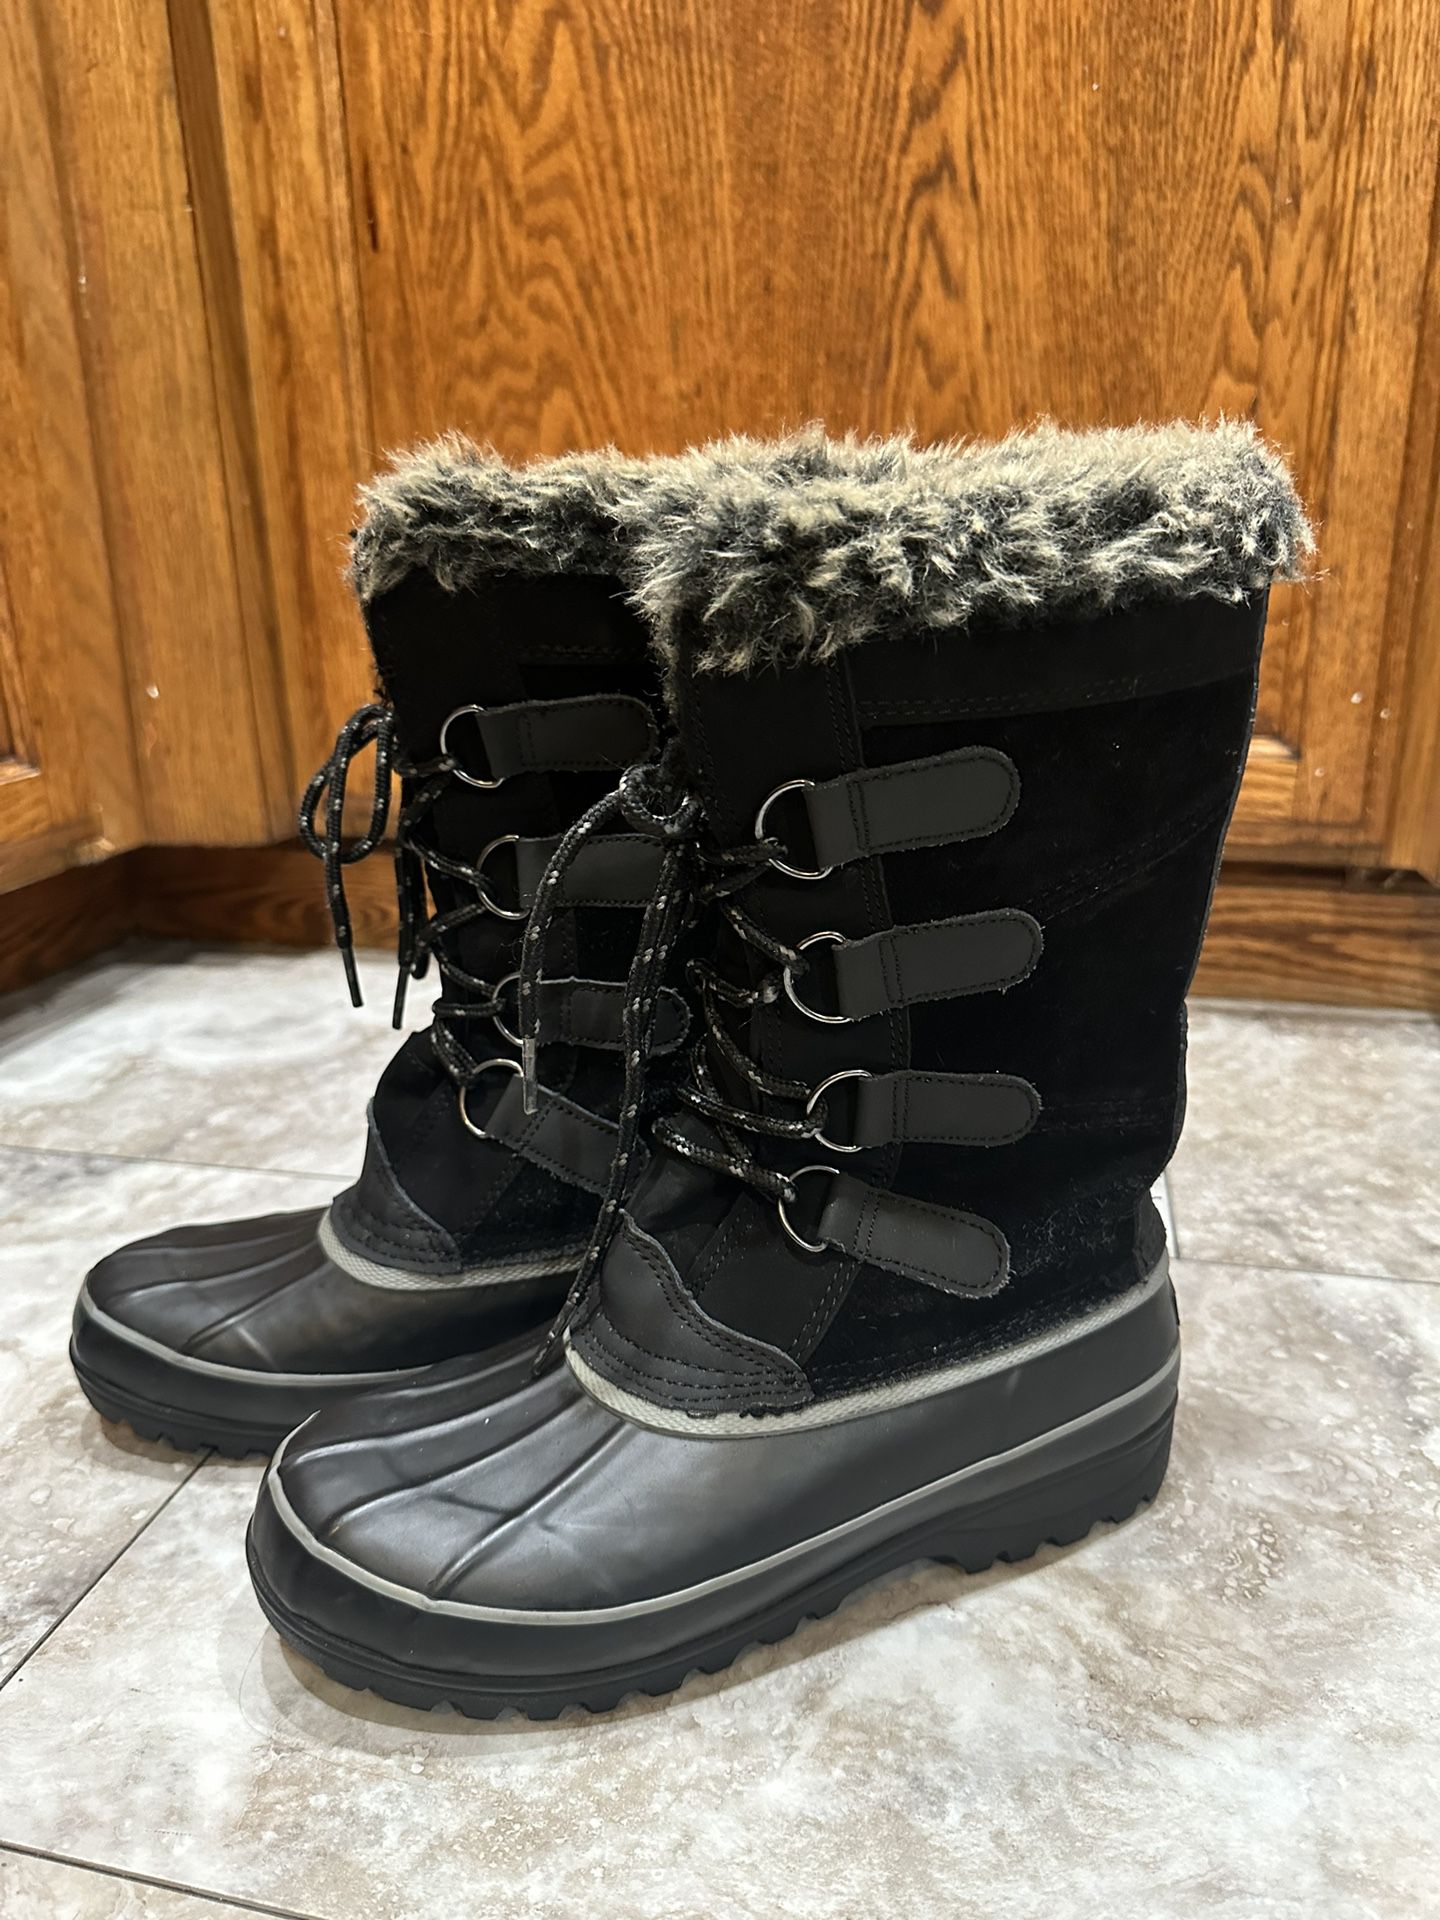 Women’s Waterproof Snow Boots, Suede Size 7